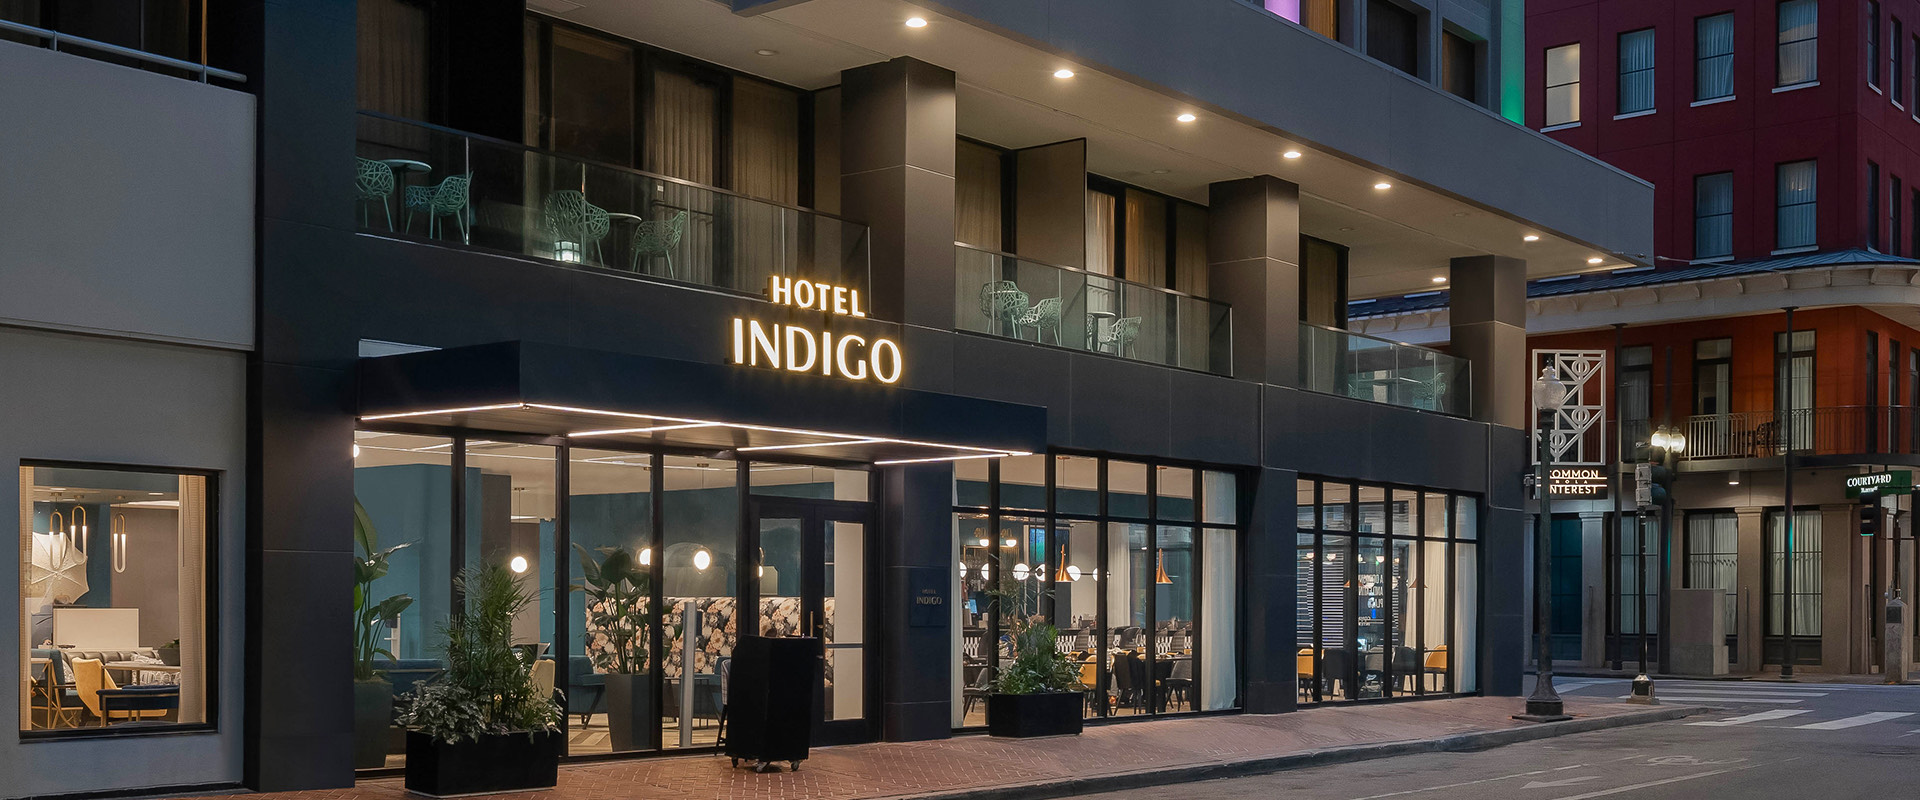 image of the outside of hotel indigo at night